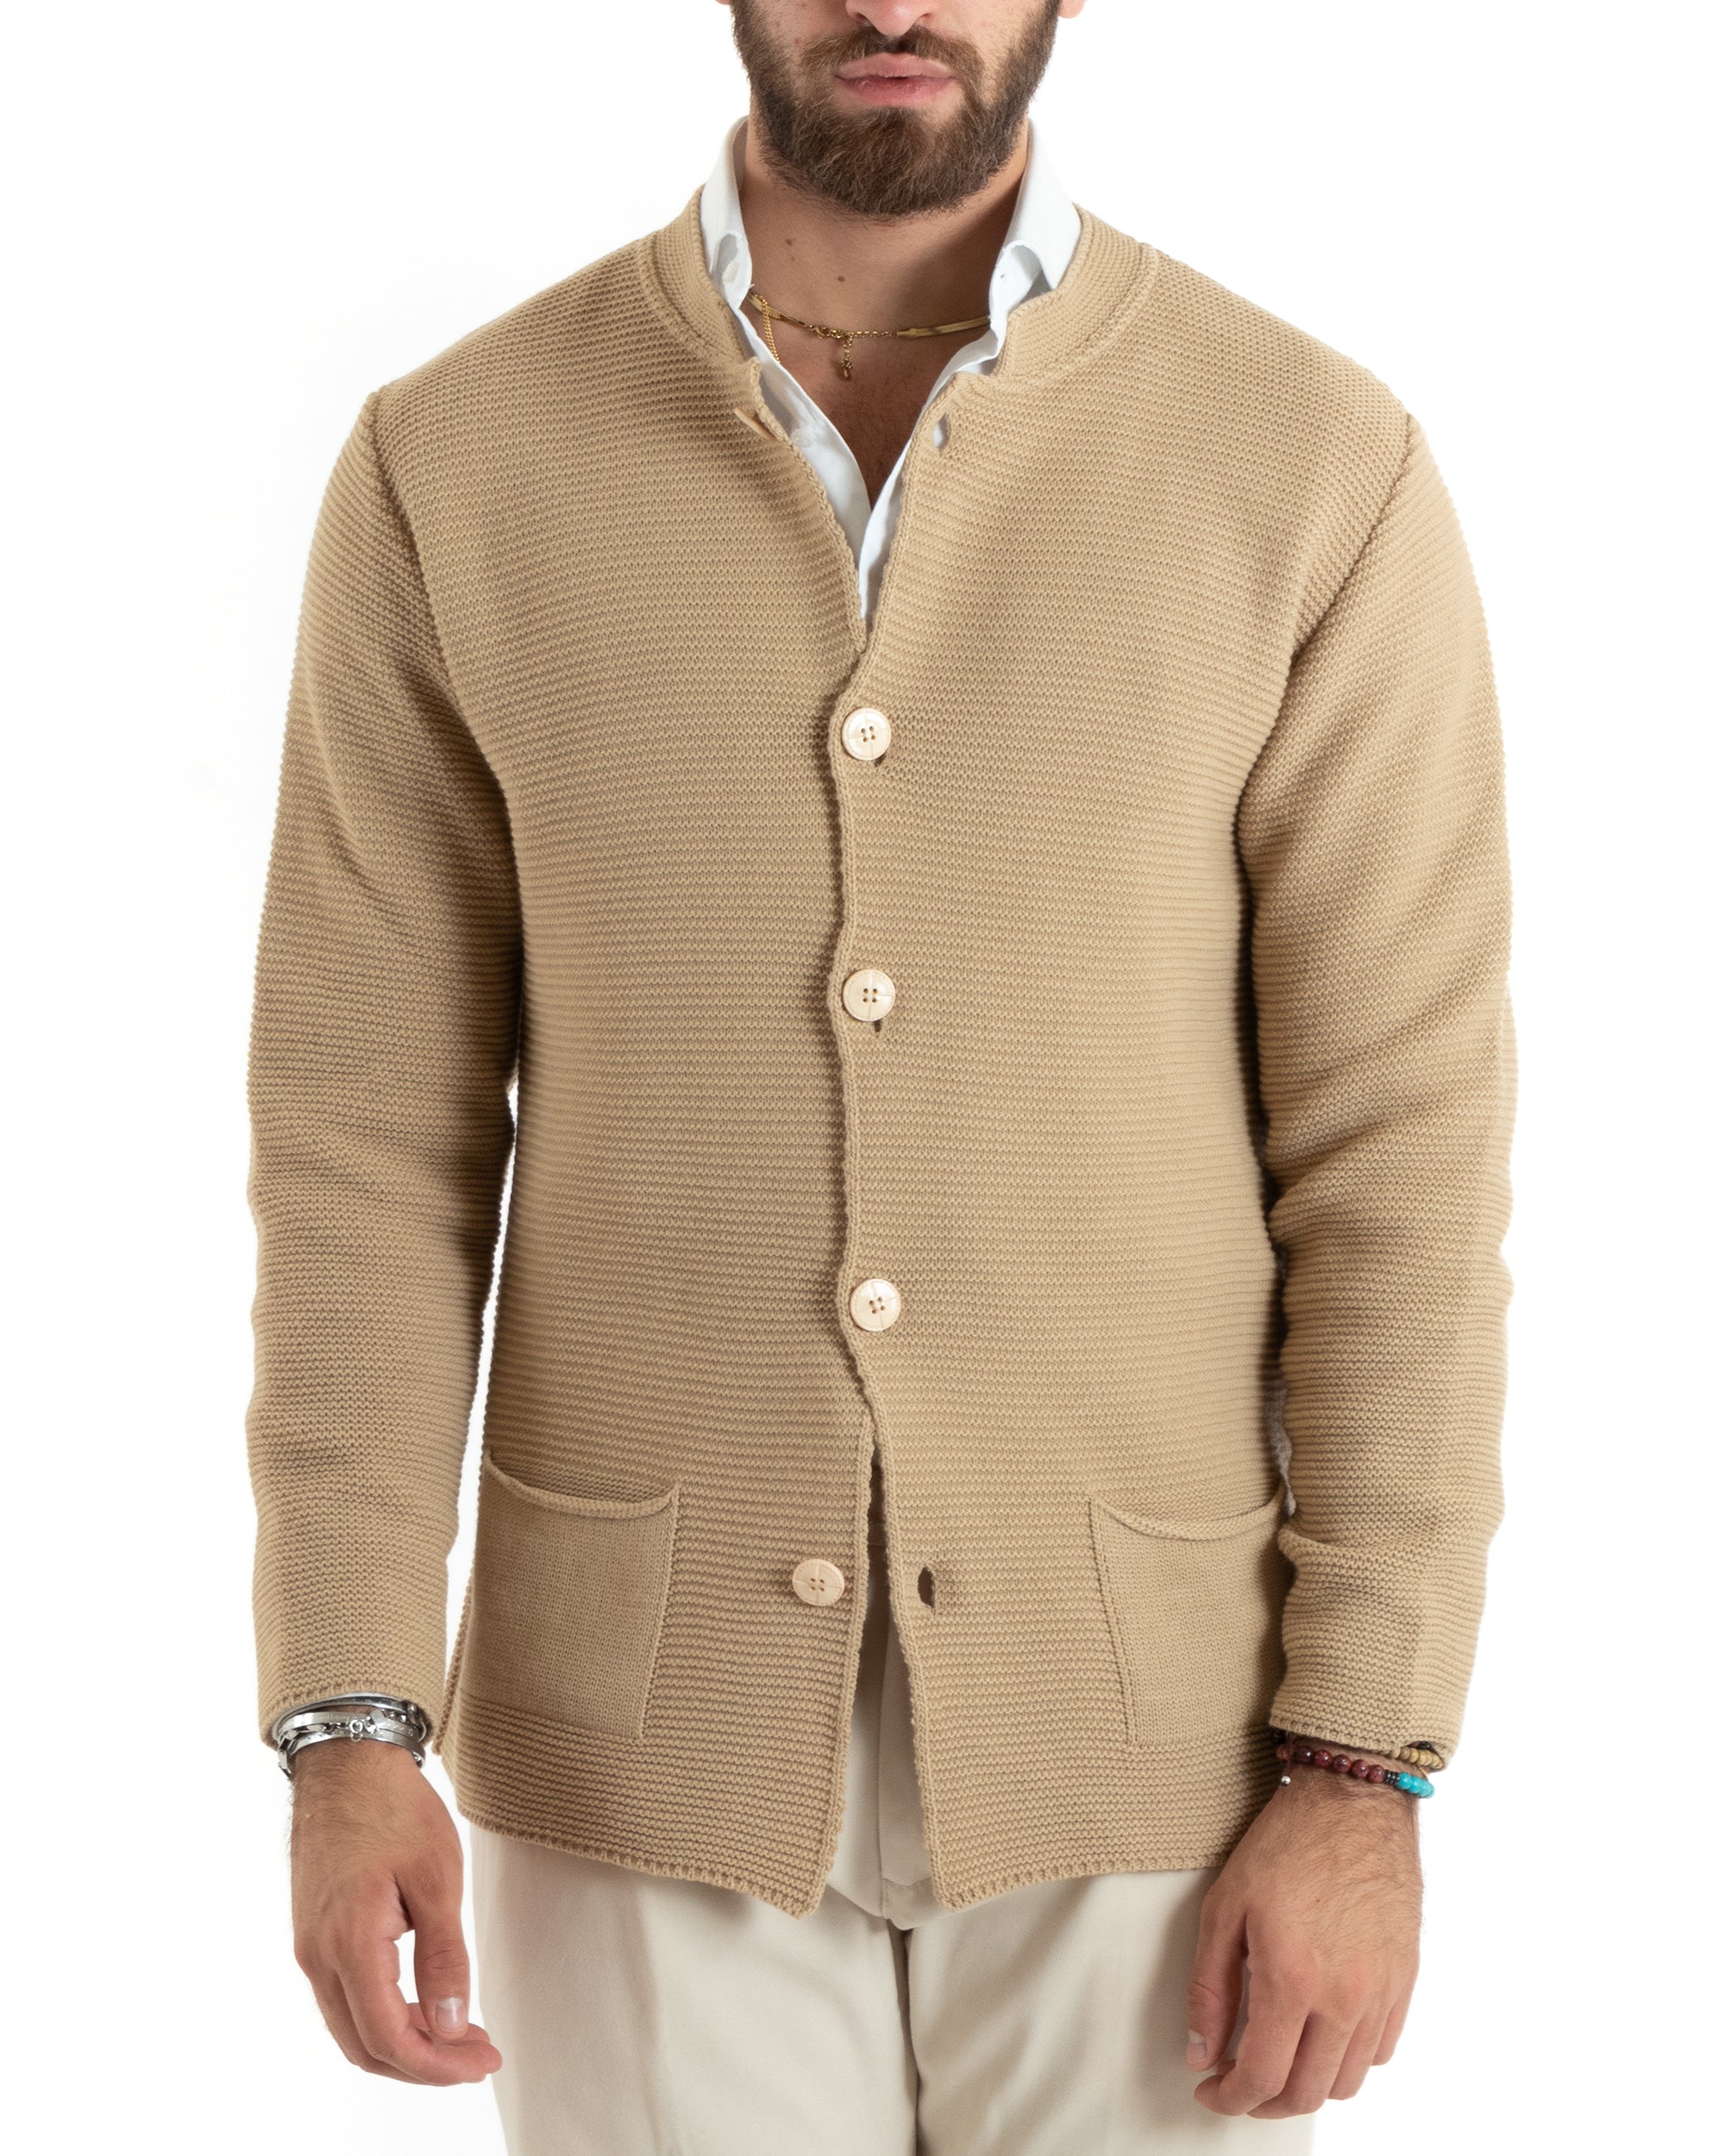 Men's cardigan in ecru wool with jacquard design | Golden Goose